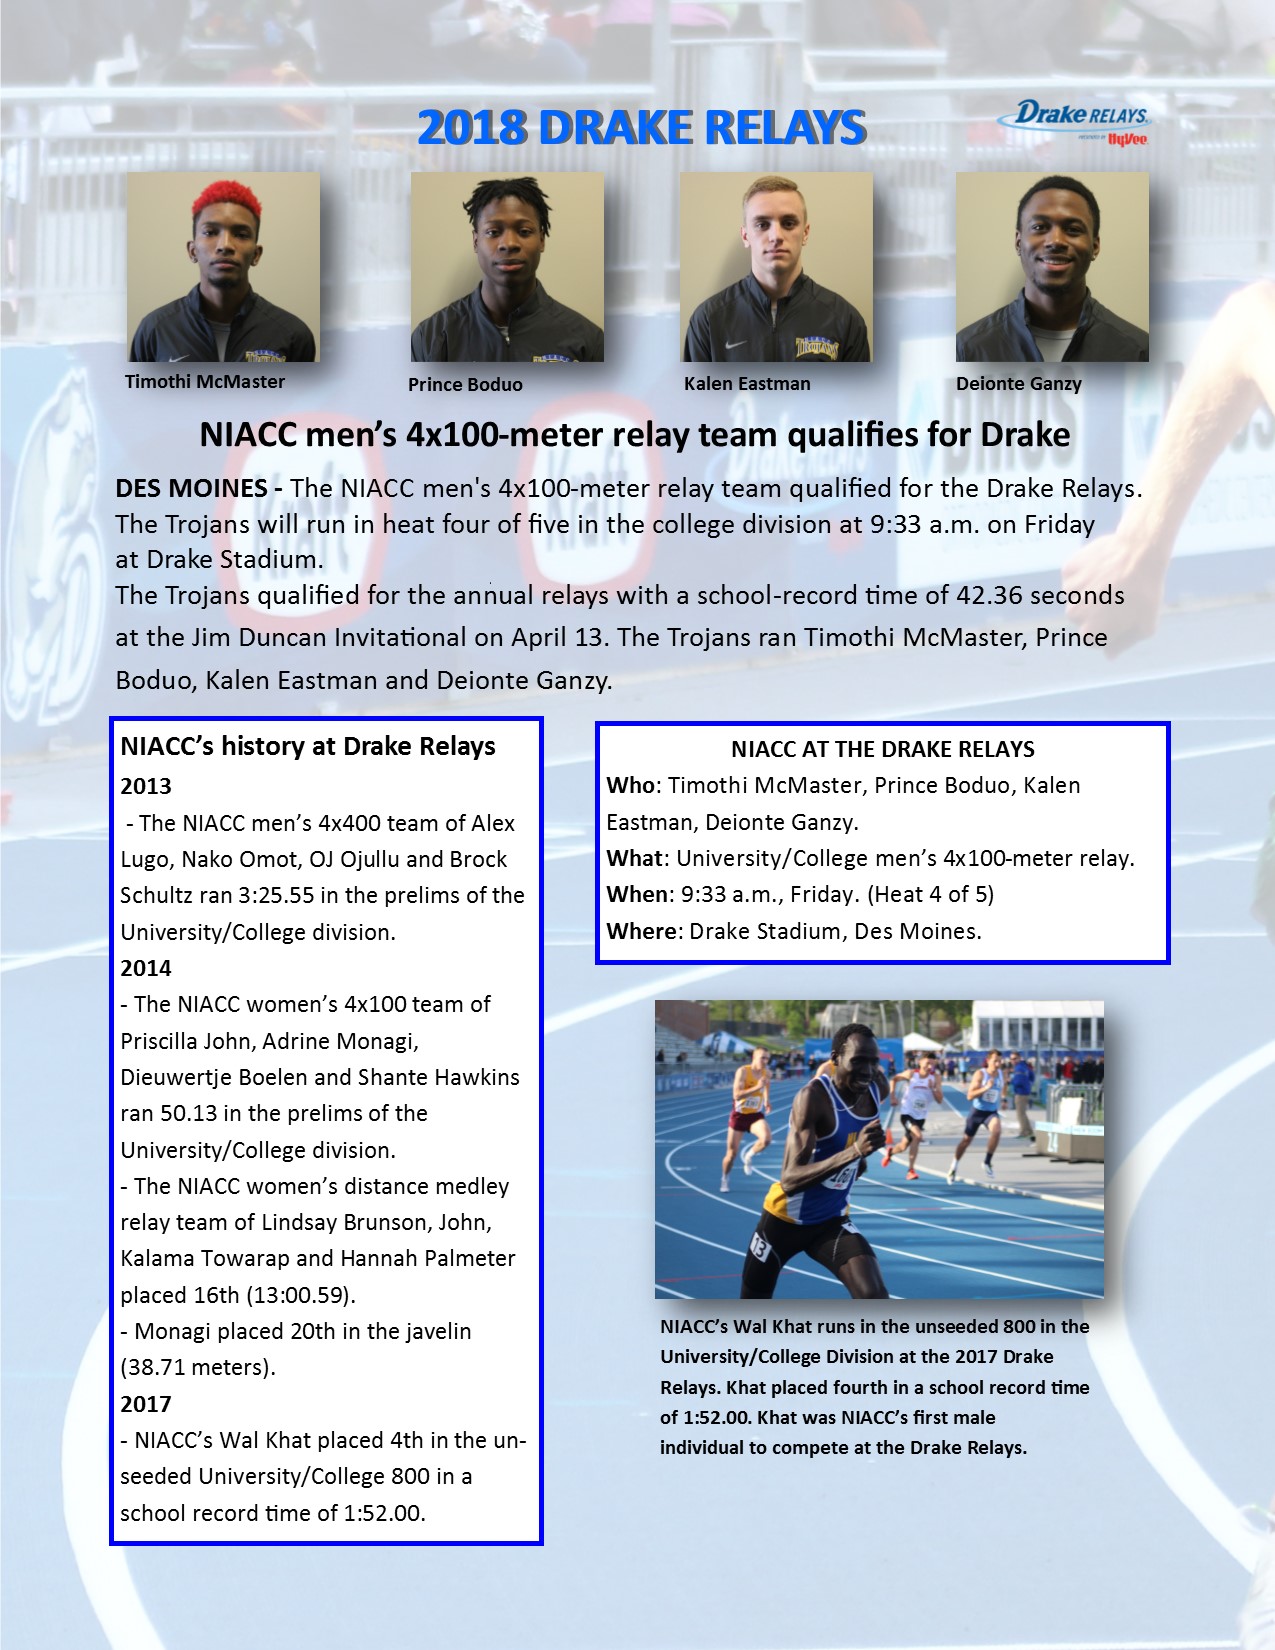 NIACC men's 4x100 team qualifies for Drake Relays